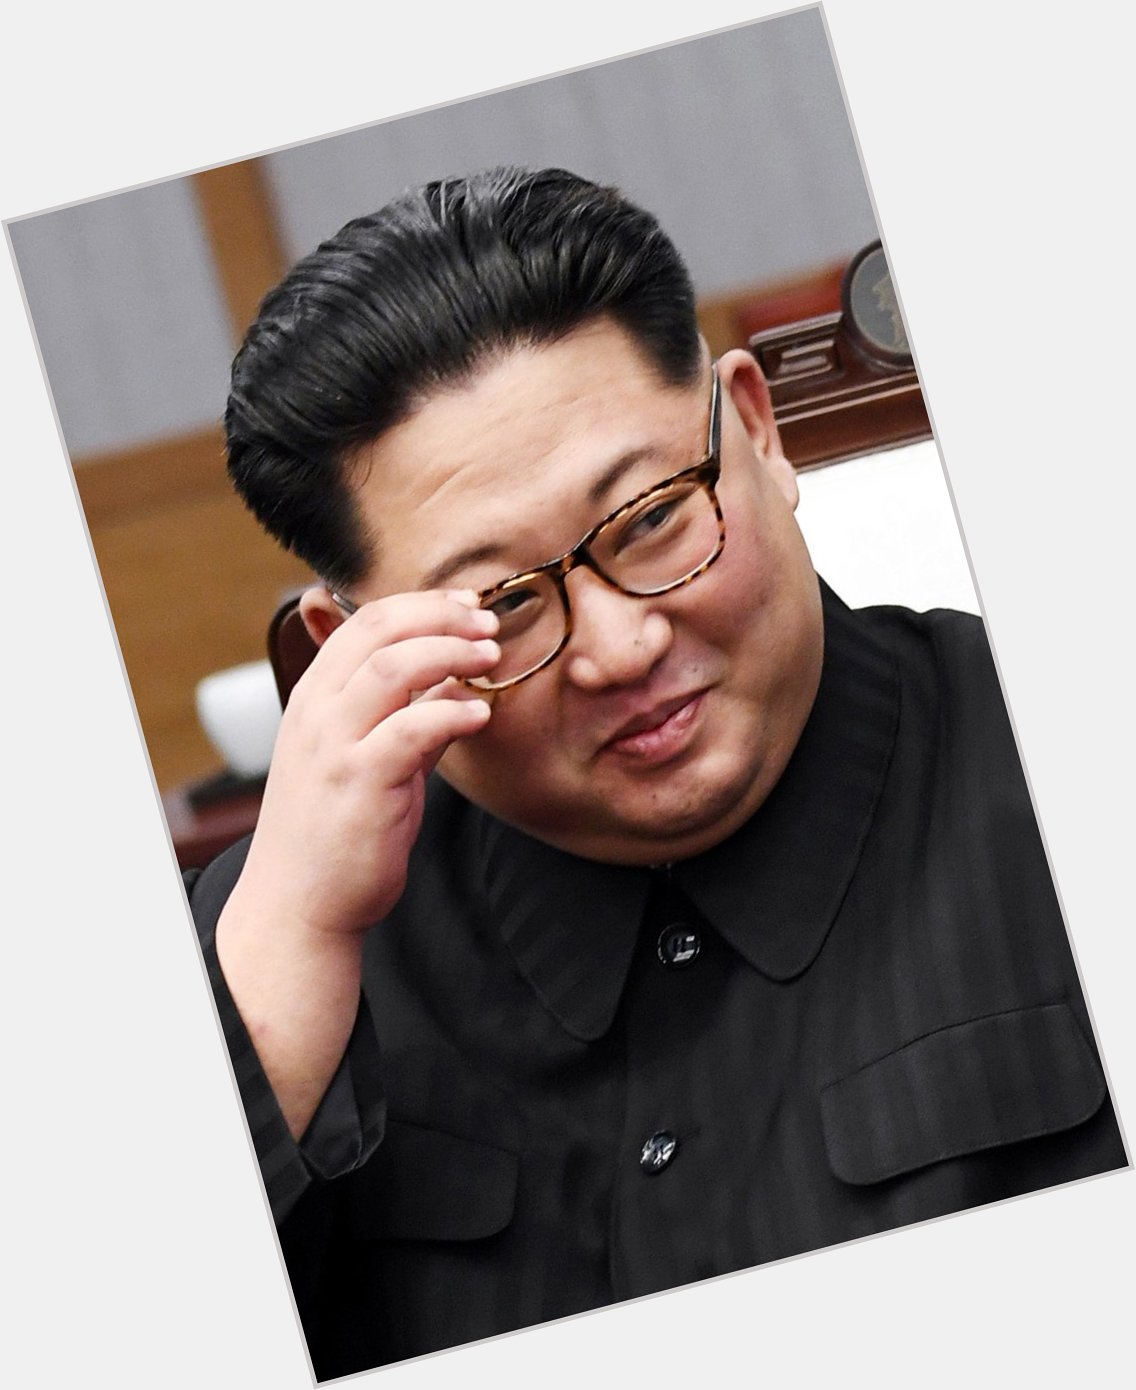 Happy birthday Kim Jong-un!

Hope you\re having a good one, big man. 